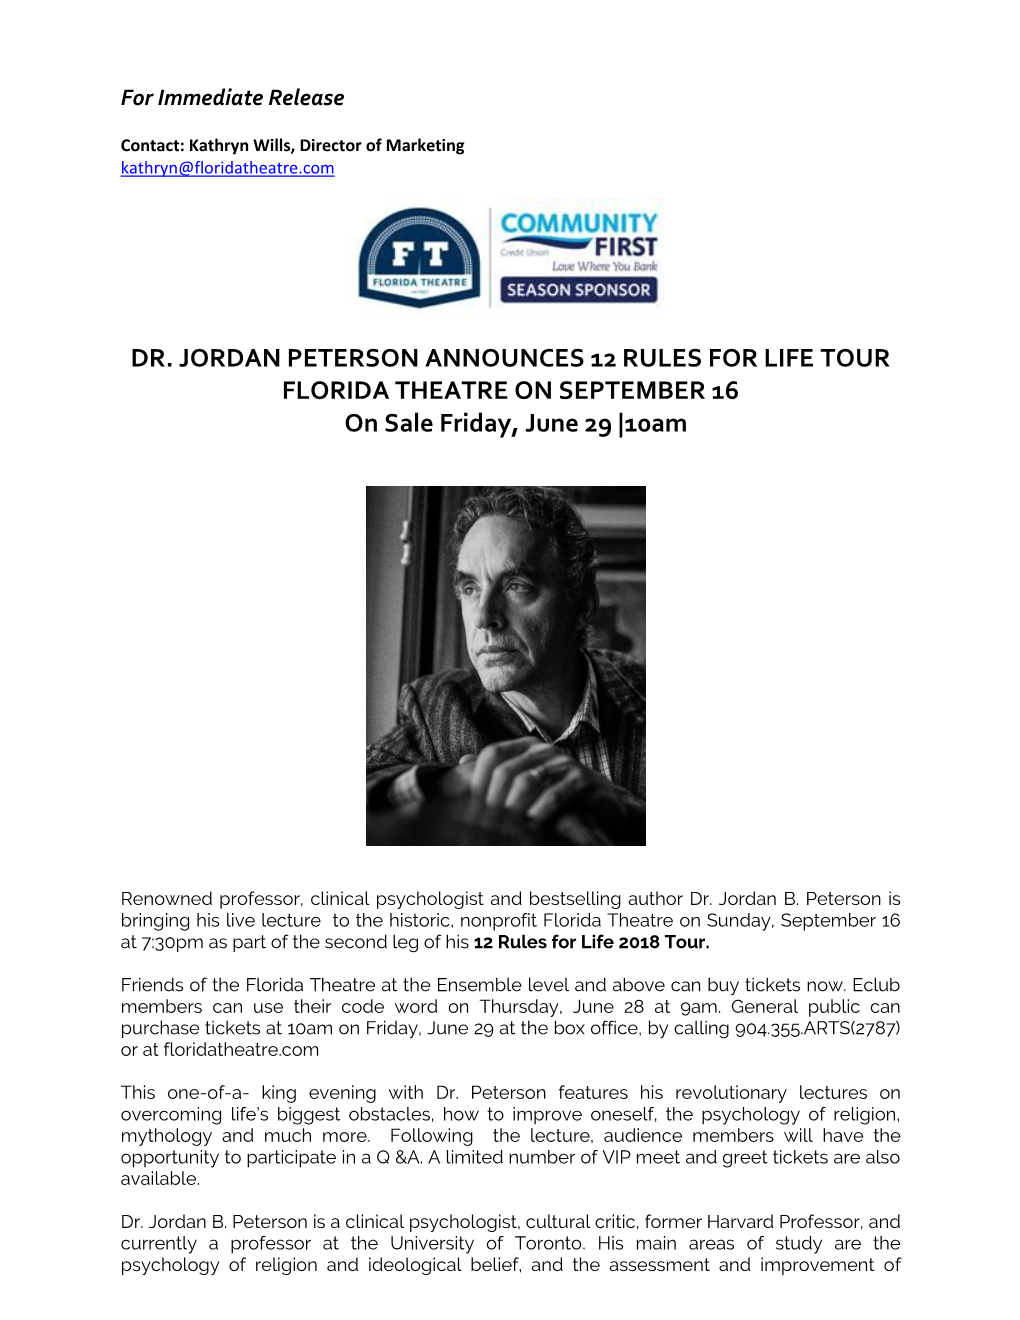 DR. JORDAN PETERSON ANNOUNCES 12 RULES for LIFE TOUR FLORIDA THEATRE on SEPTEMBER 16 on Sale Friday, June 29 |10Am